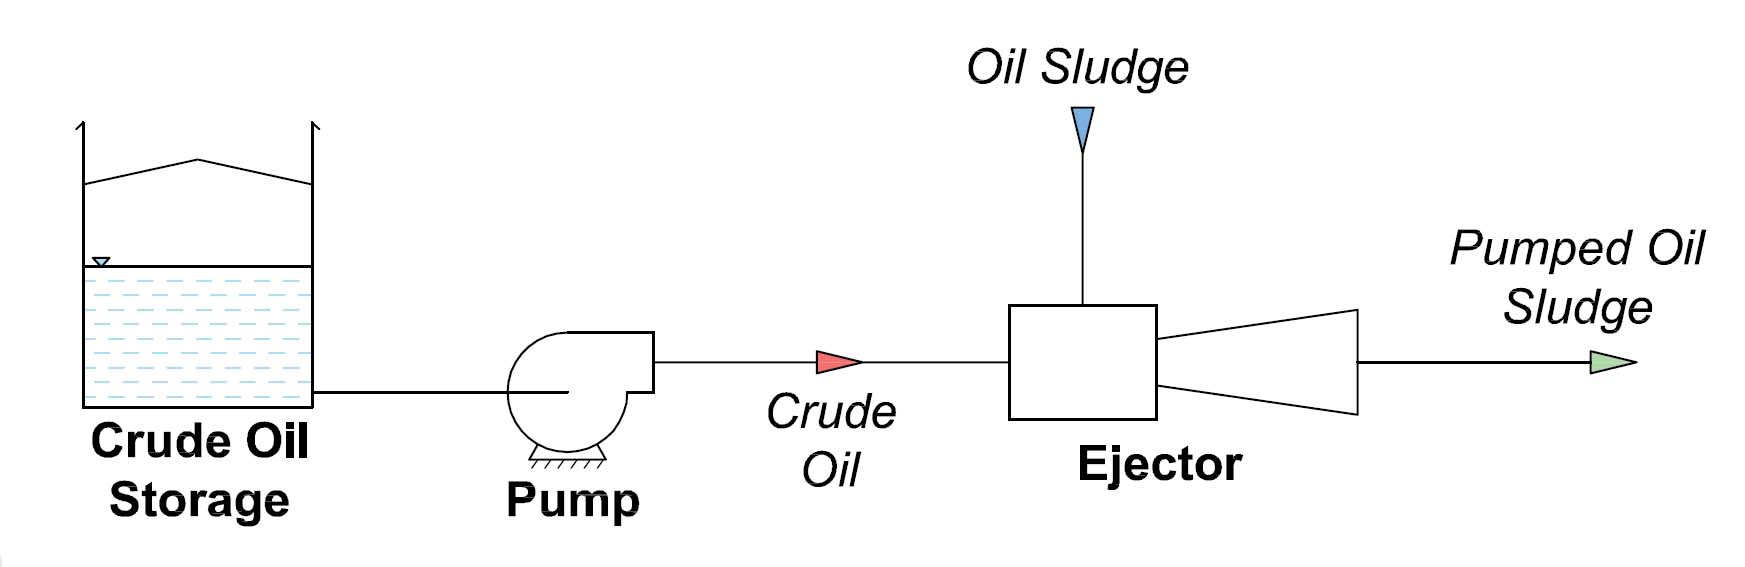 Sludge Eductor for Oil Sludge Pumping